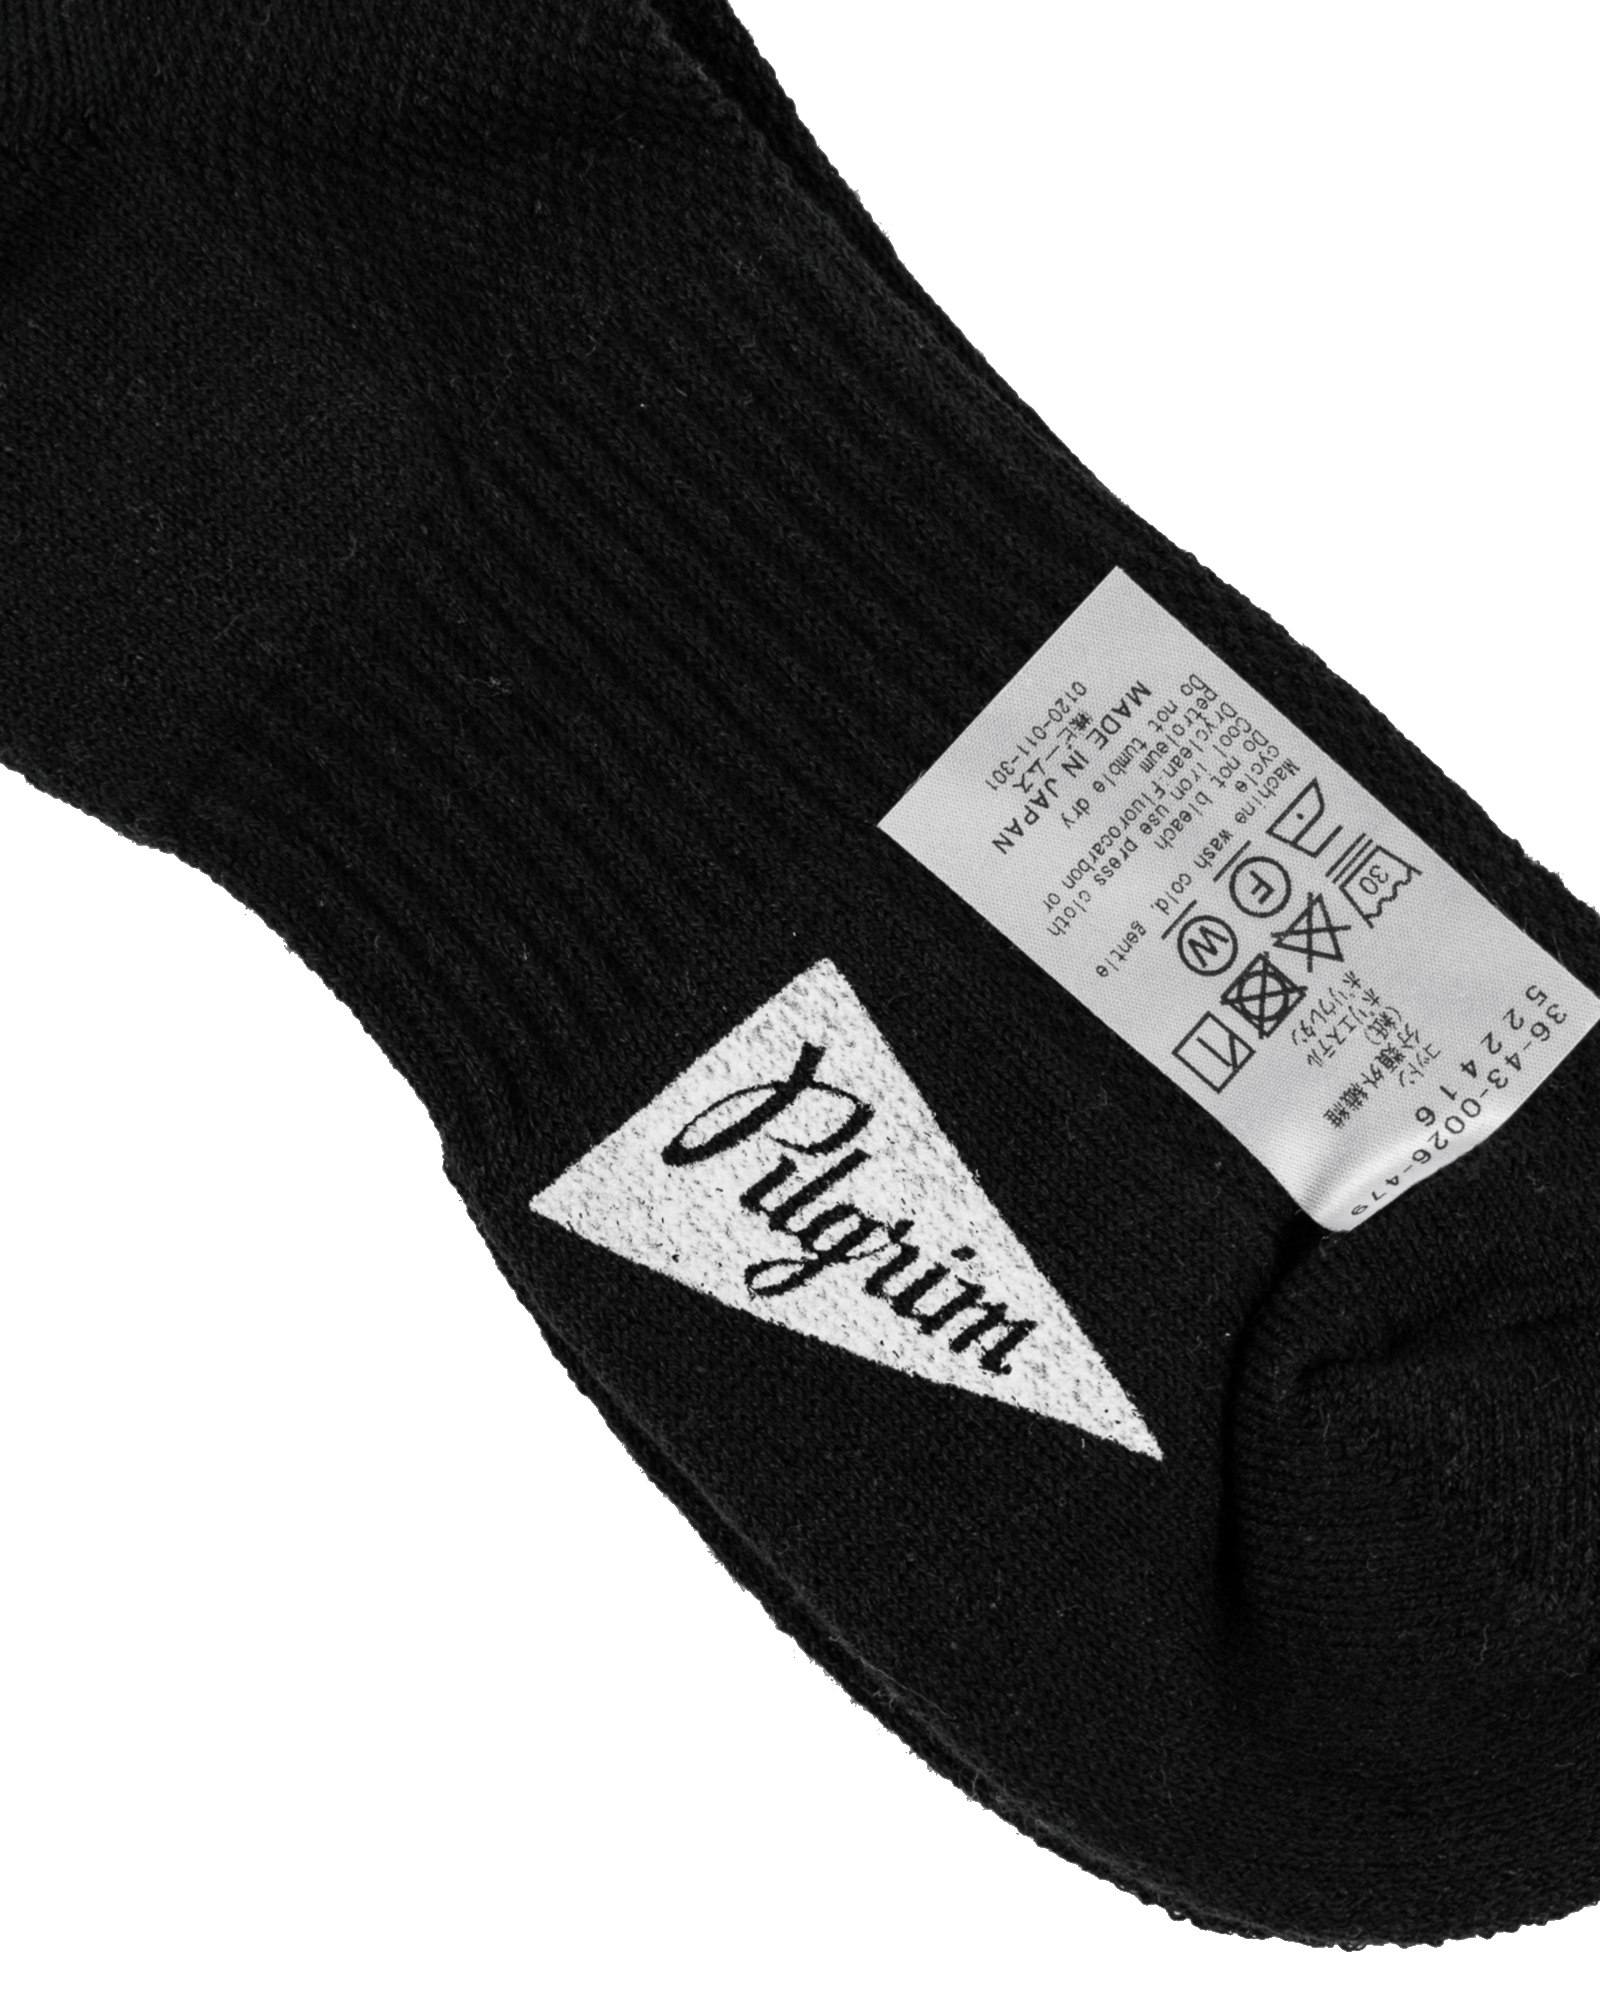 Pilgrim Surf + Supply - Accessory - Papermix - Crew Socks - Black